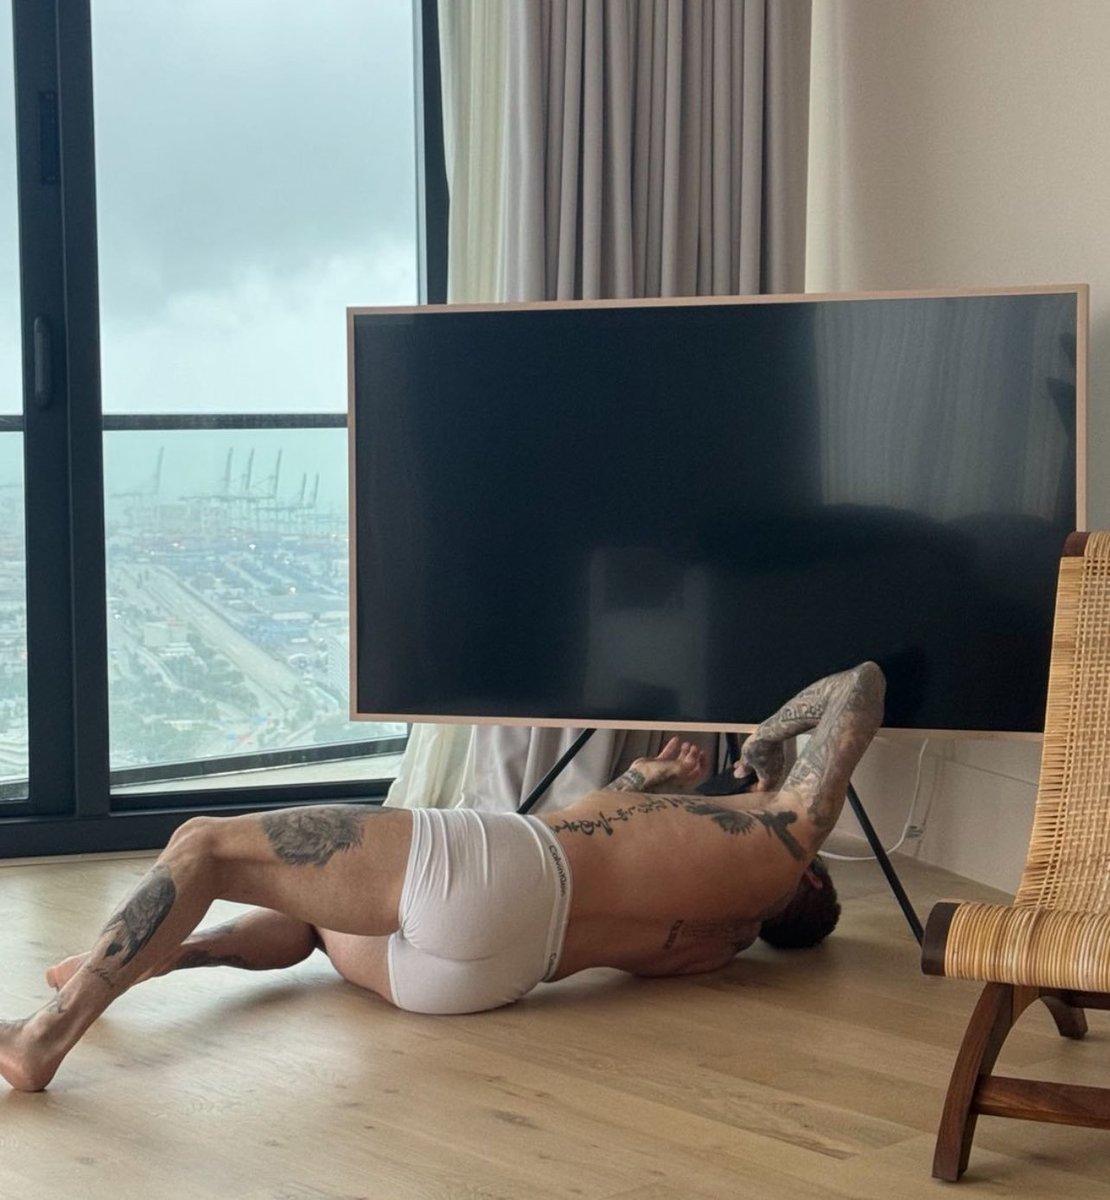 Victoria Beckham posts a photo of husband David Beckham fixing their TV, cheekily captioning, 'Electrician came to fix the TV... You're welcome!' 📺🔧 

#davidbeckham #diyexpert #tvrepair